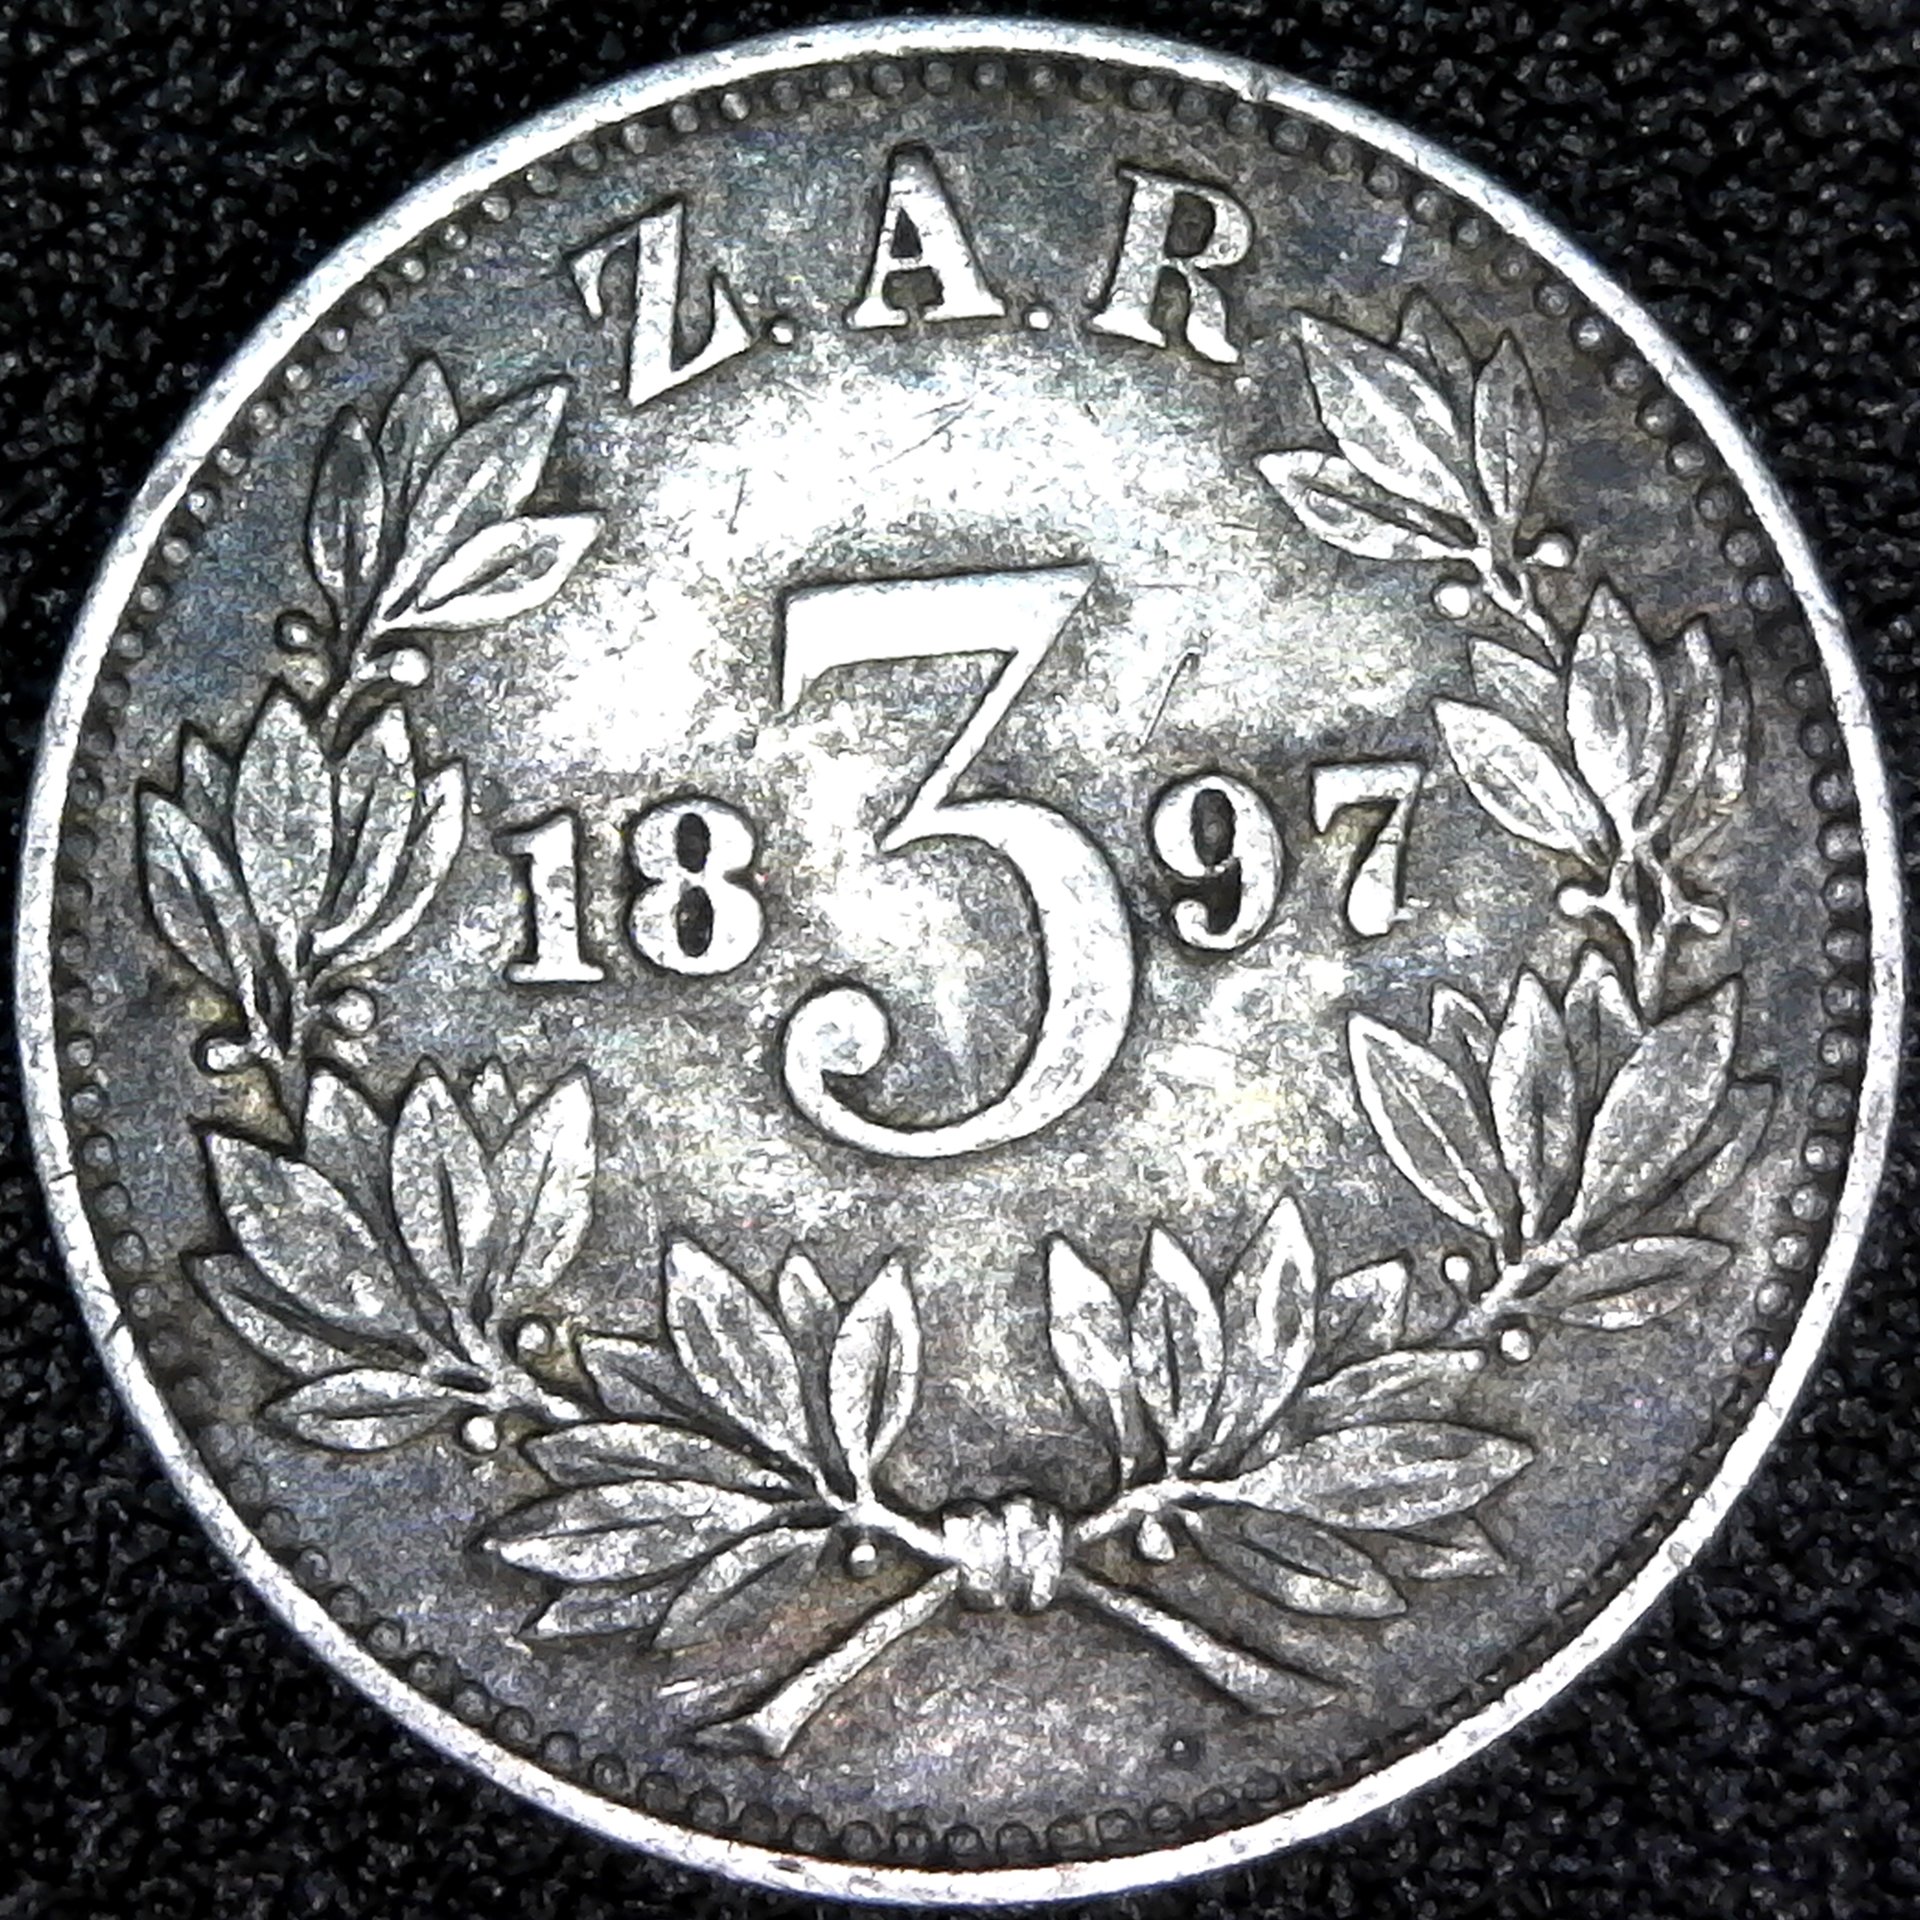 South Africa 3 Pence 1897 rev.jpg